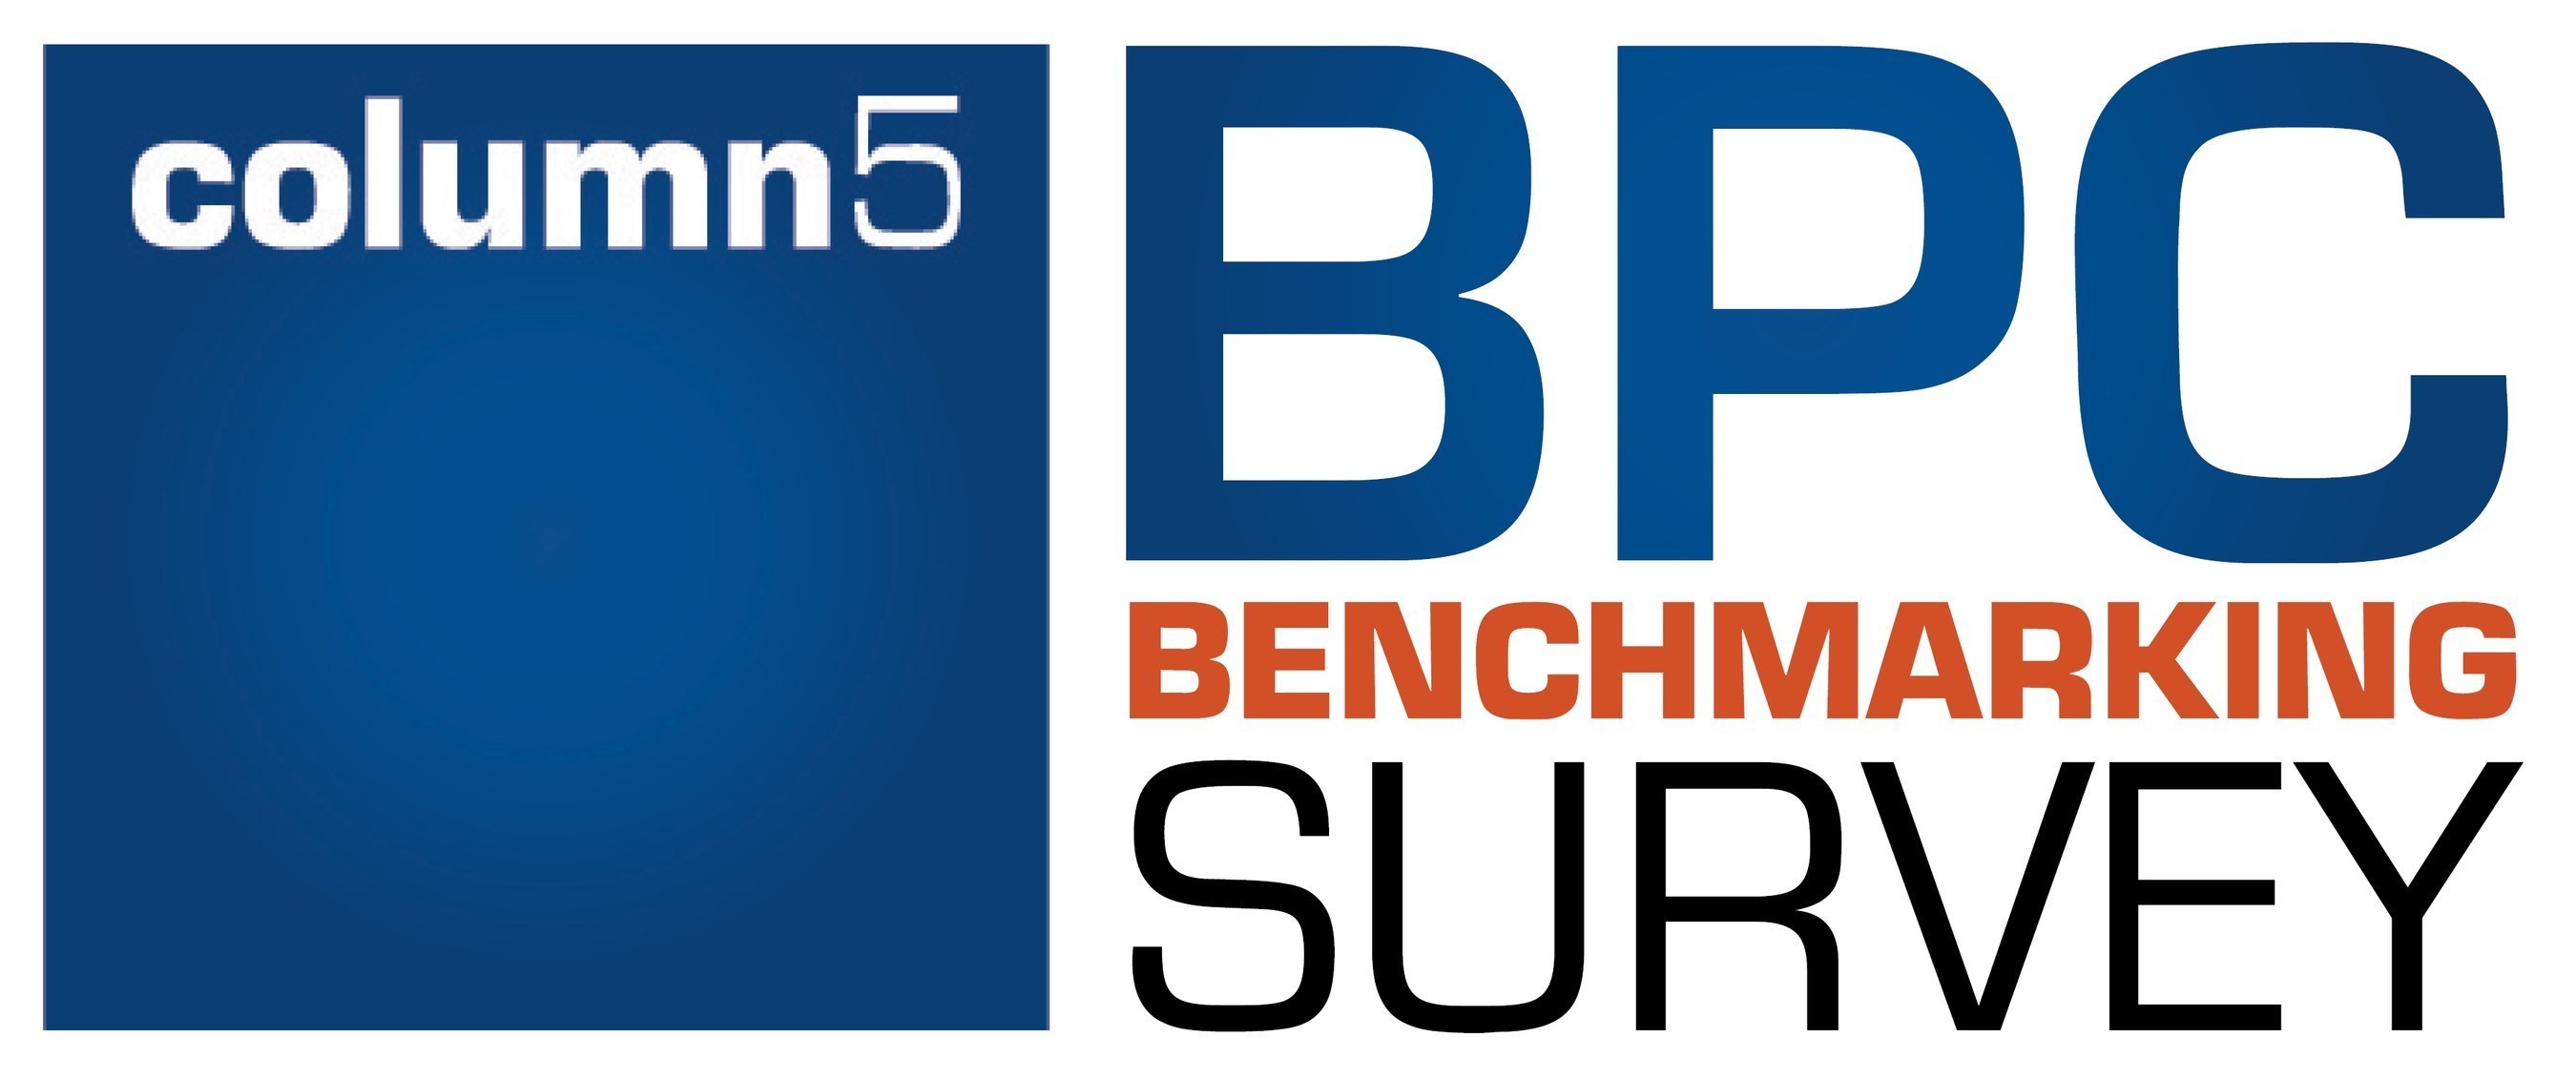 Take the Column5 BPC Benchmarking Survey!